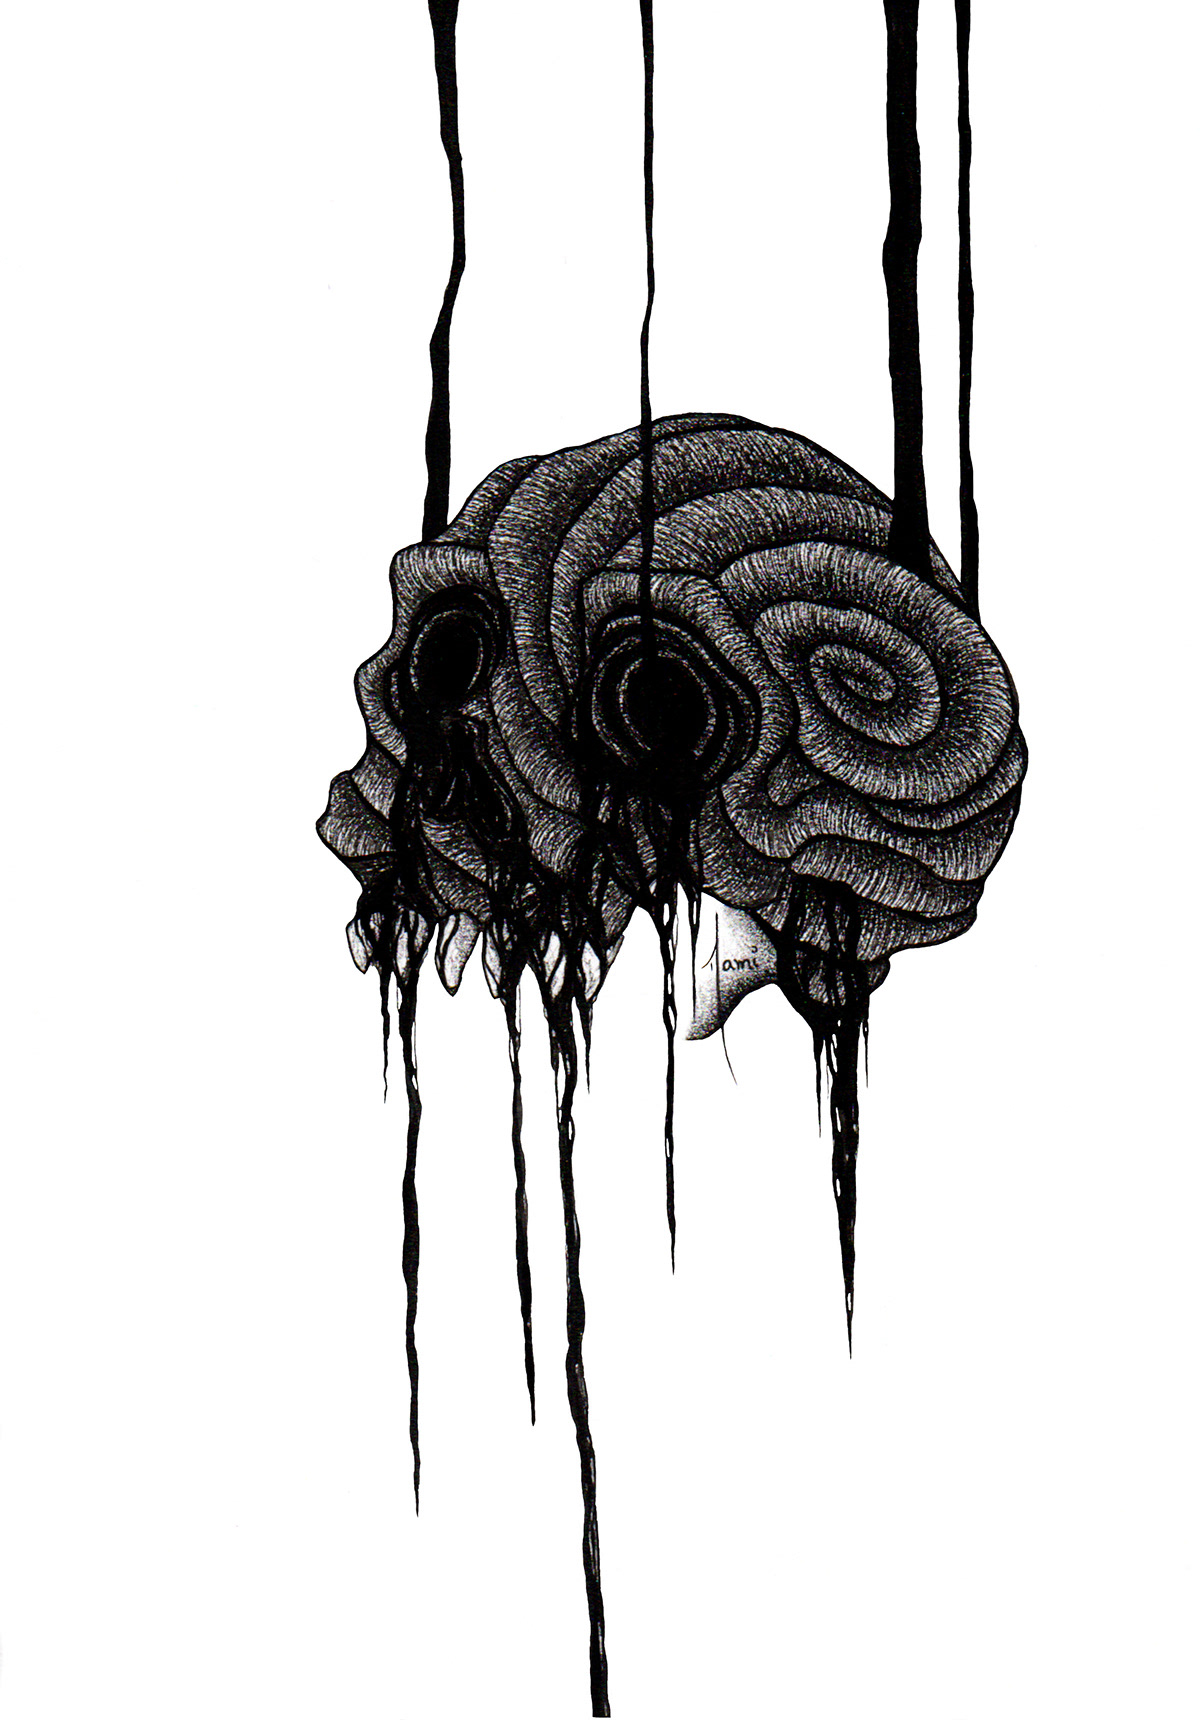 Pasta rpg Portifólio nanquim dark art black and white desenho Ilustração fanart ink